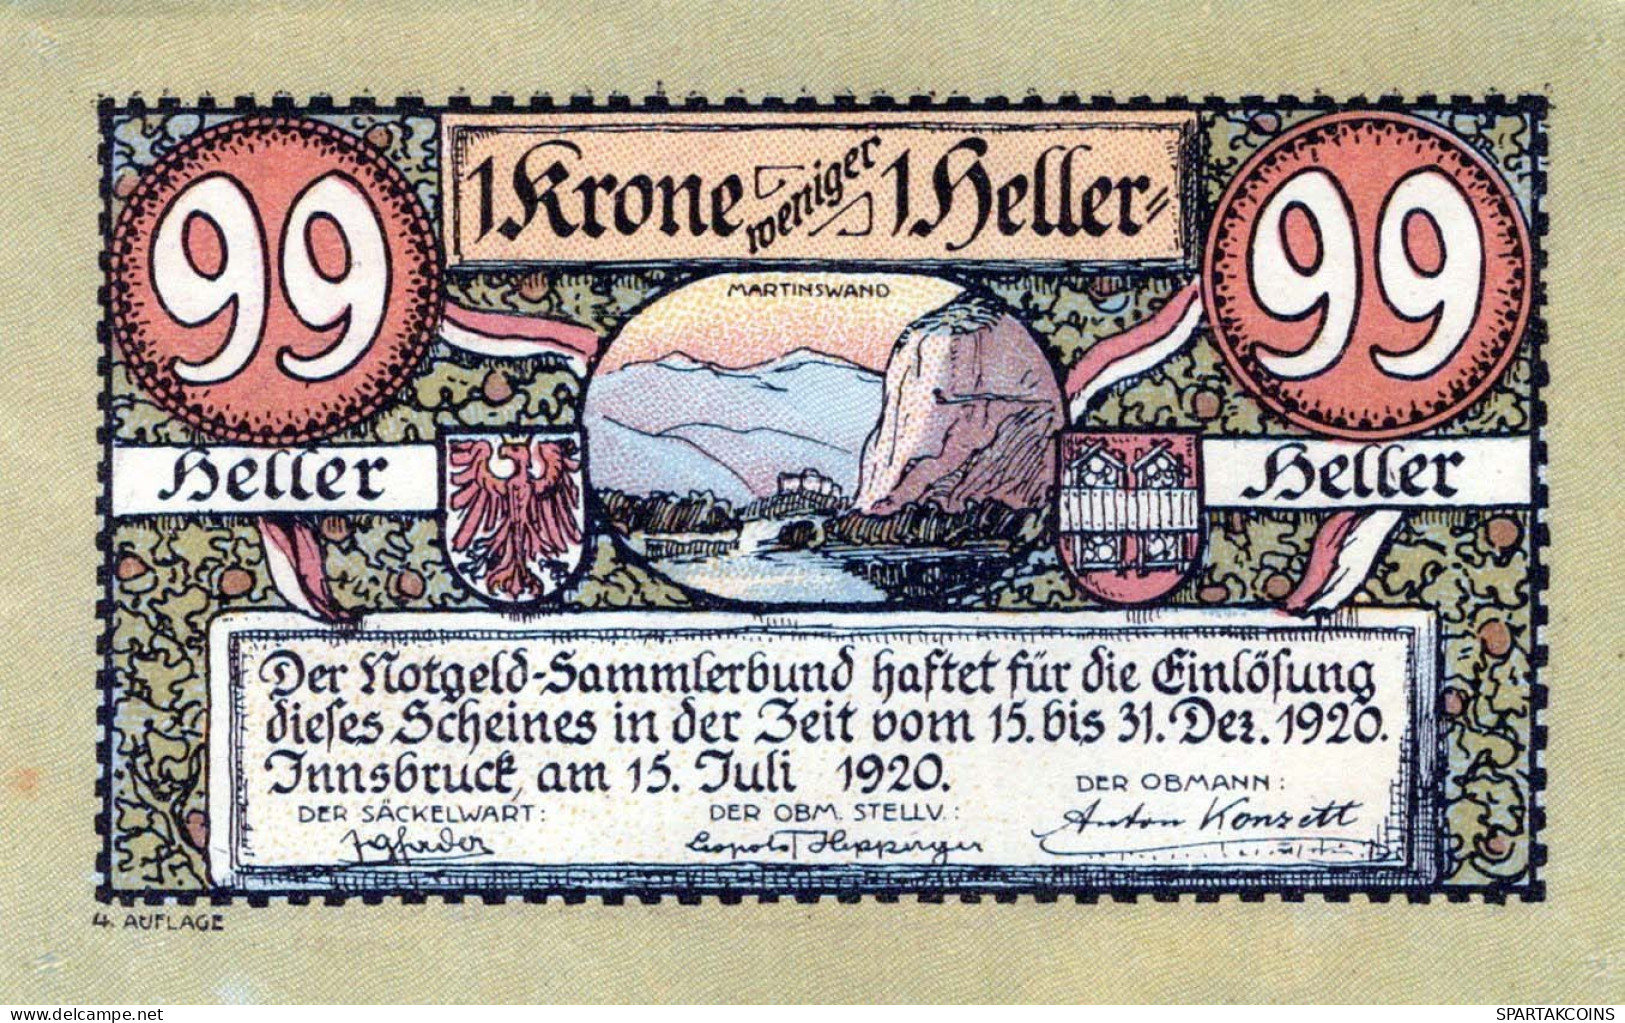 99 HELLER 1920 Stadt INNSBRUCK Tyrol Österreich Notgeld Banknote #PD870 - [11] Local Banknote Issues